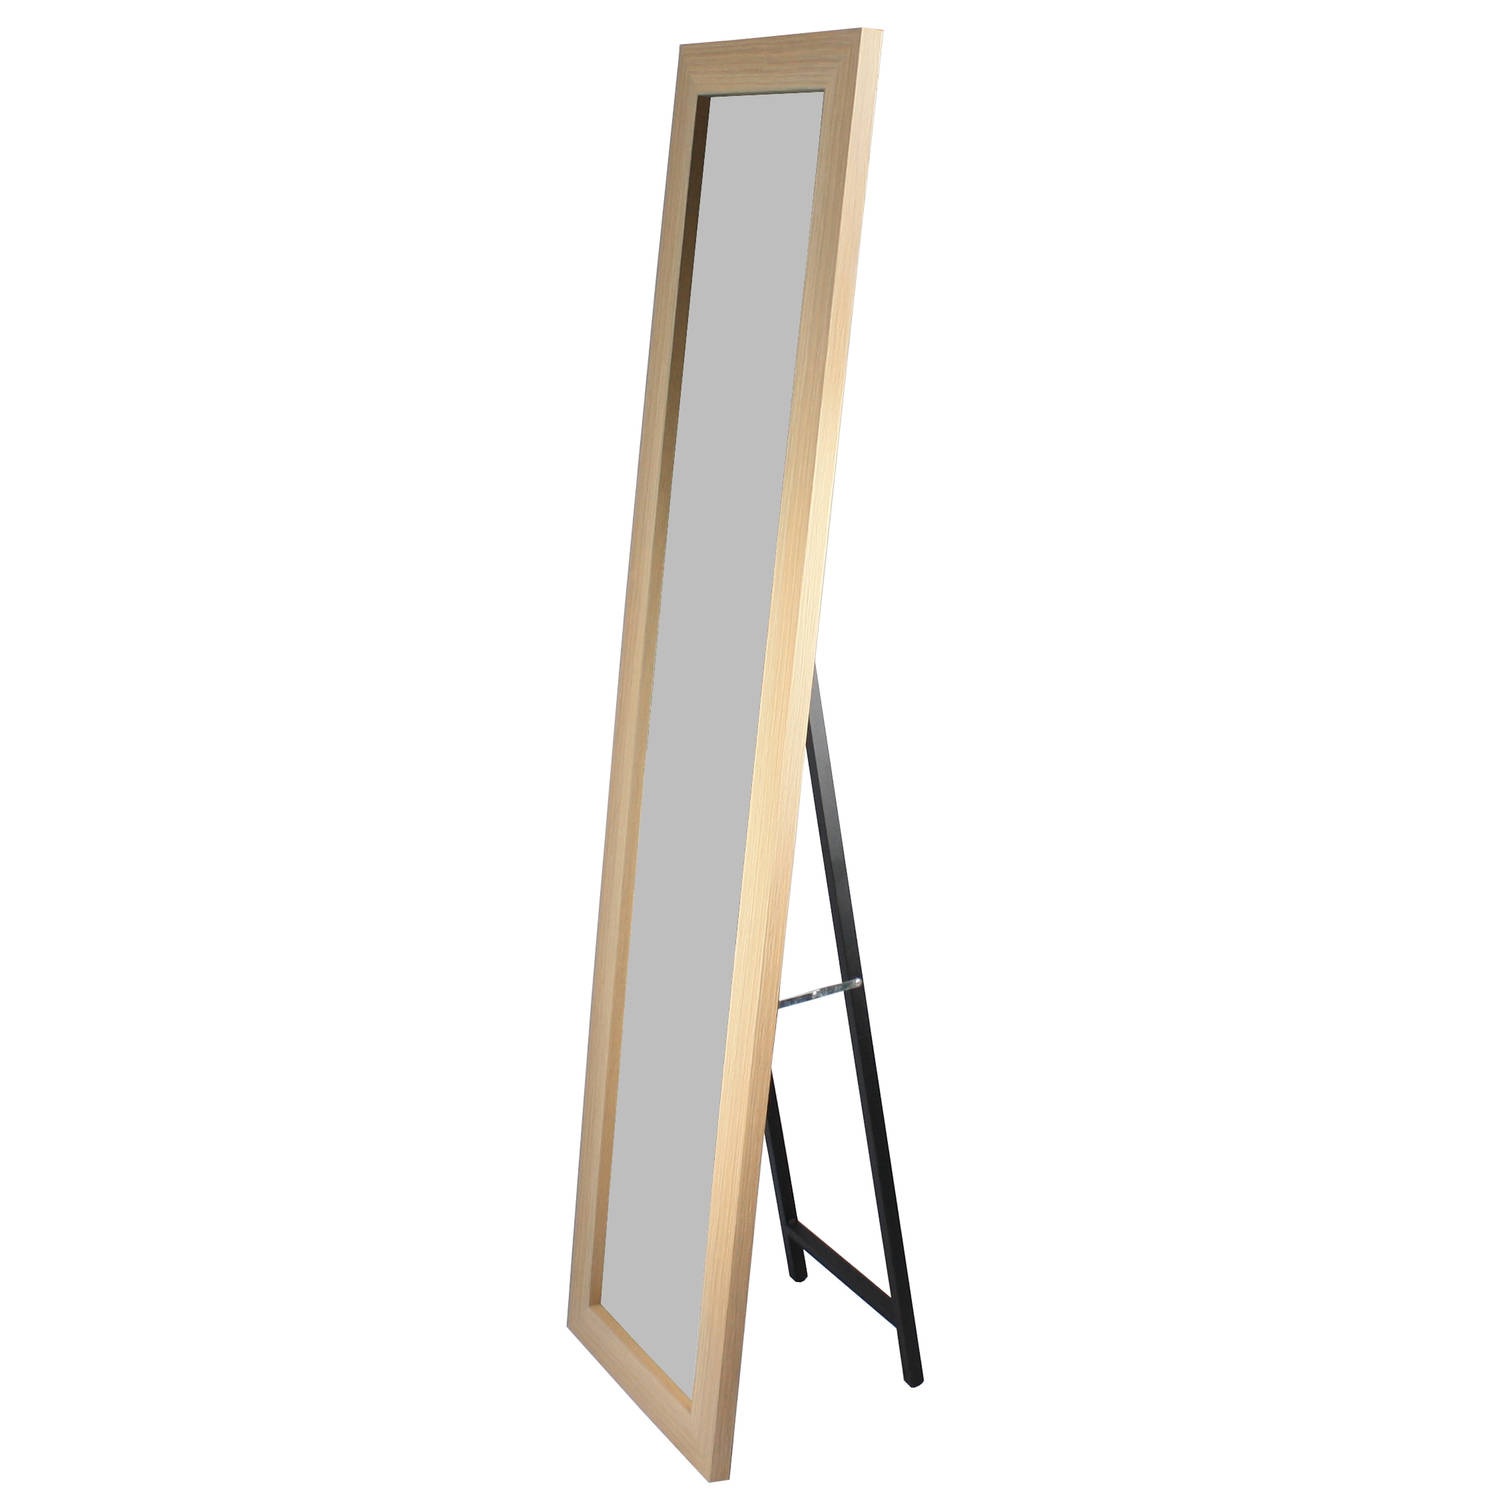 Lowander staande spiegel 160x40 cm passpiegel-vrijstaande garderobe spiegel houten lijst